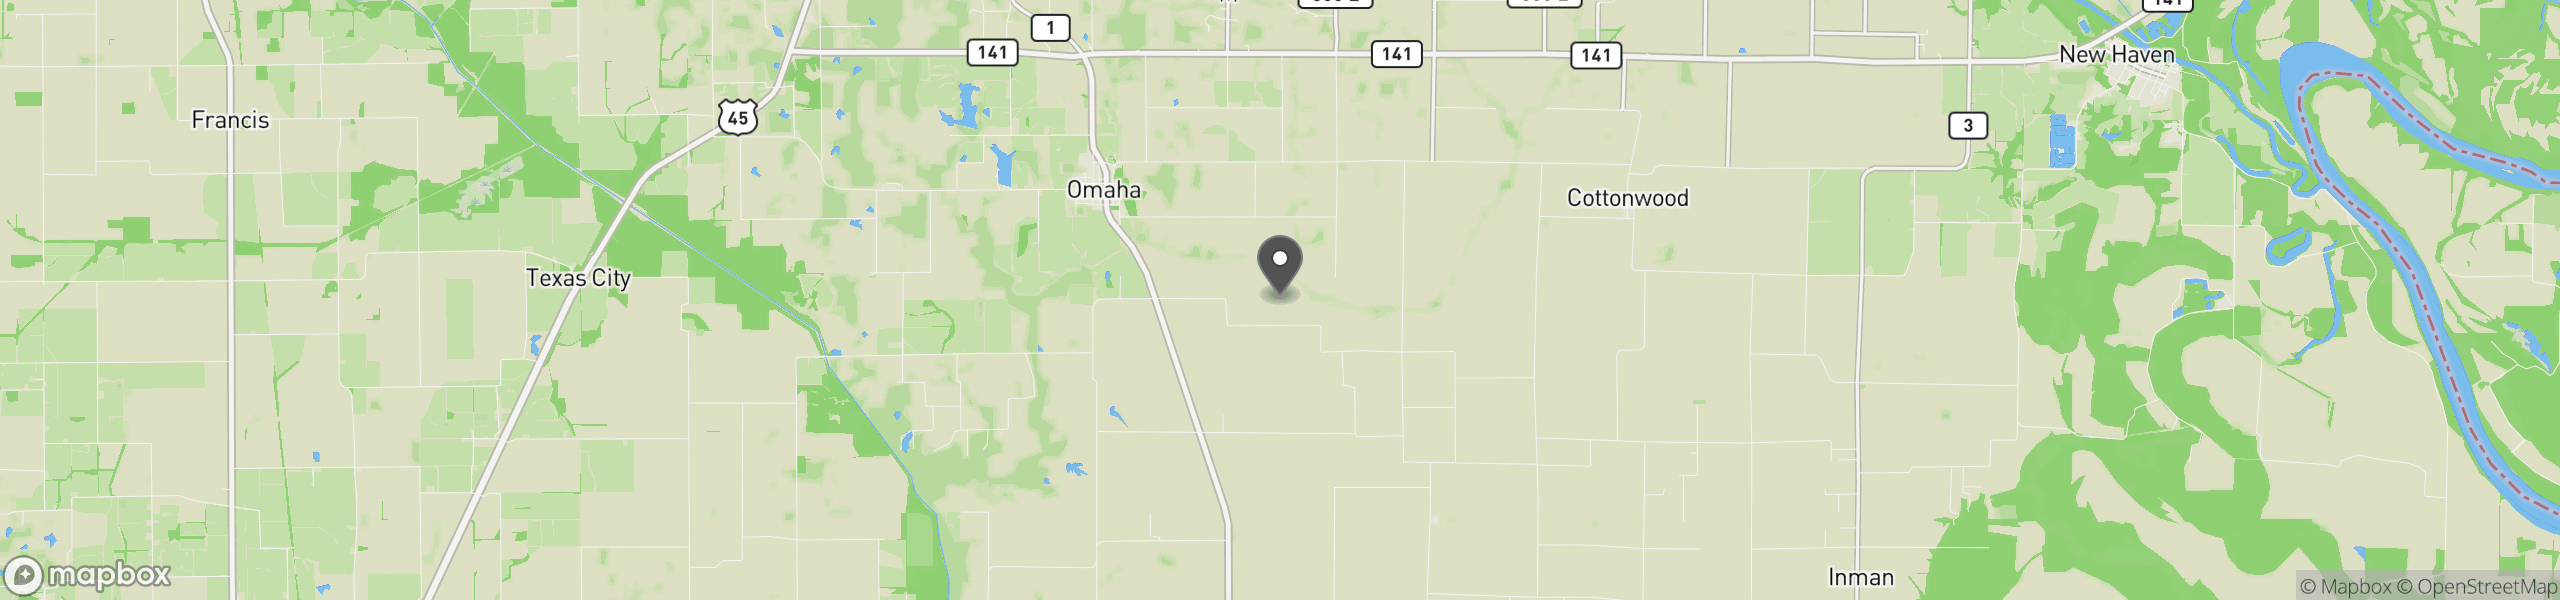 Omaha, IL 62871